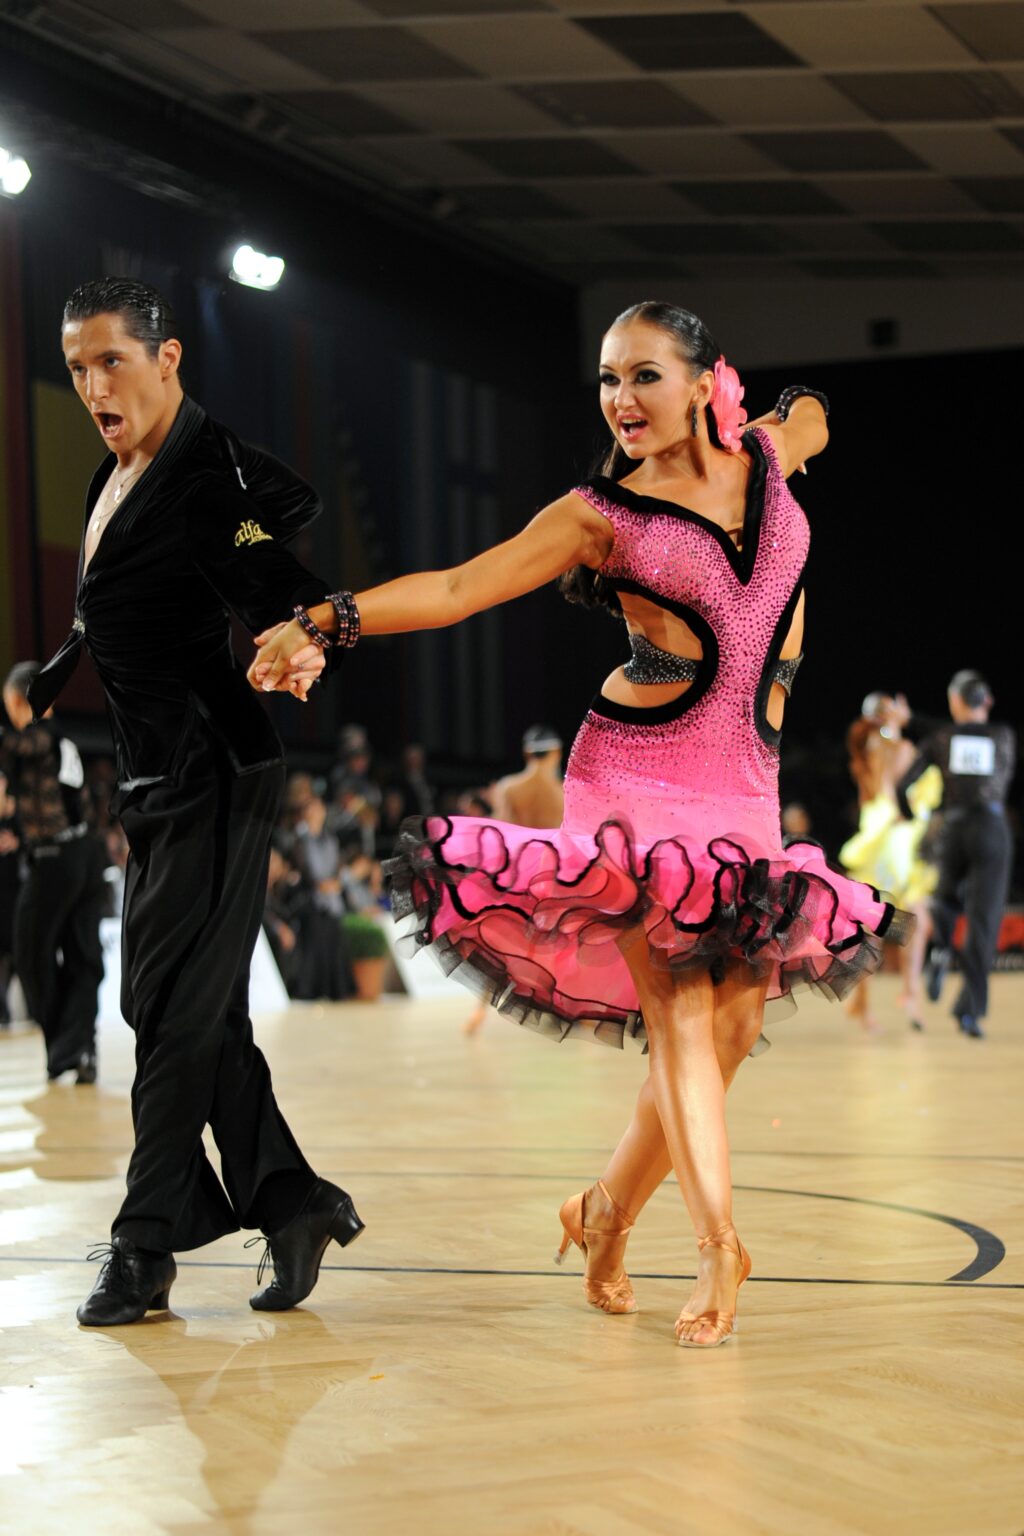 Latin American origin dances as part of the dancesport - Cha-Cha, Samba ...